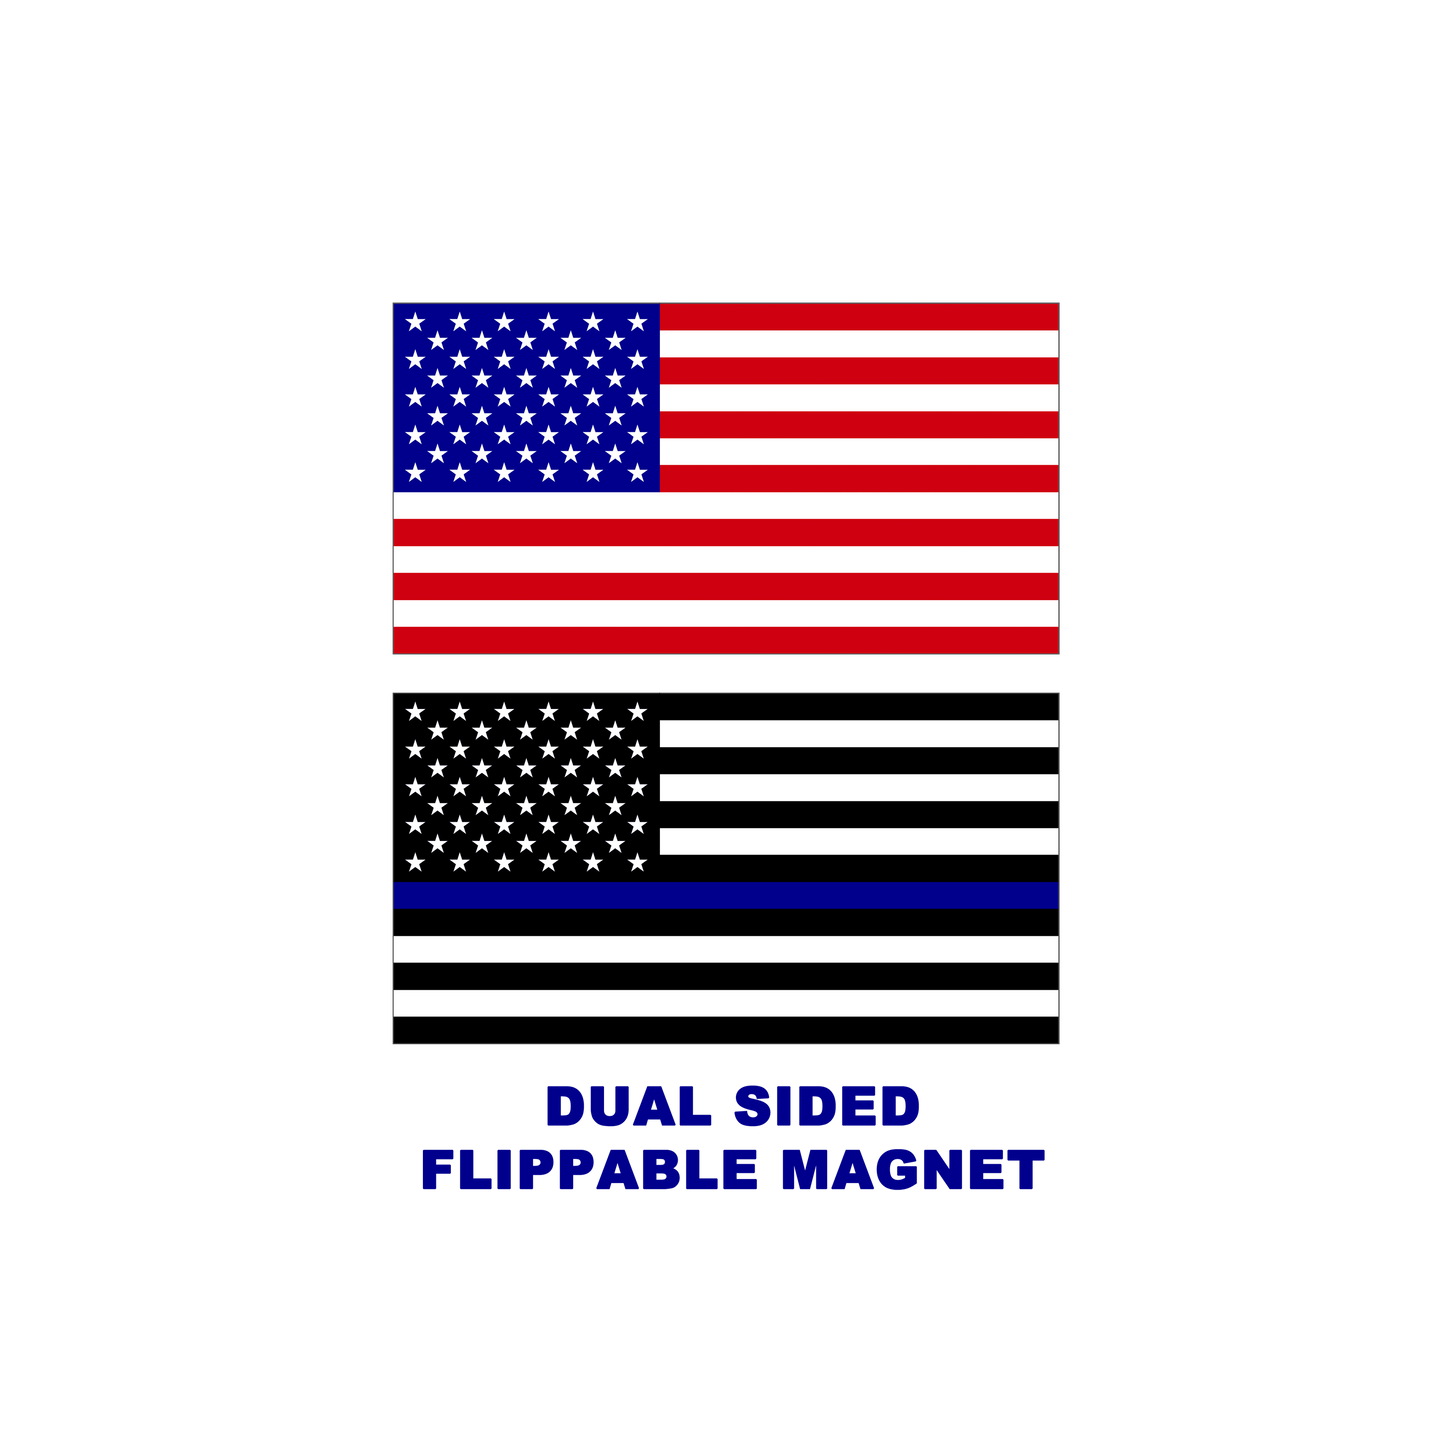 E-019 Thin Blue Line 2 sided reversible magnet CBP Police HSI Secret Service ATF LEO